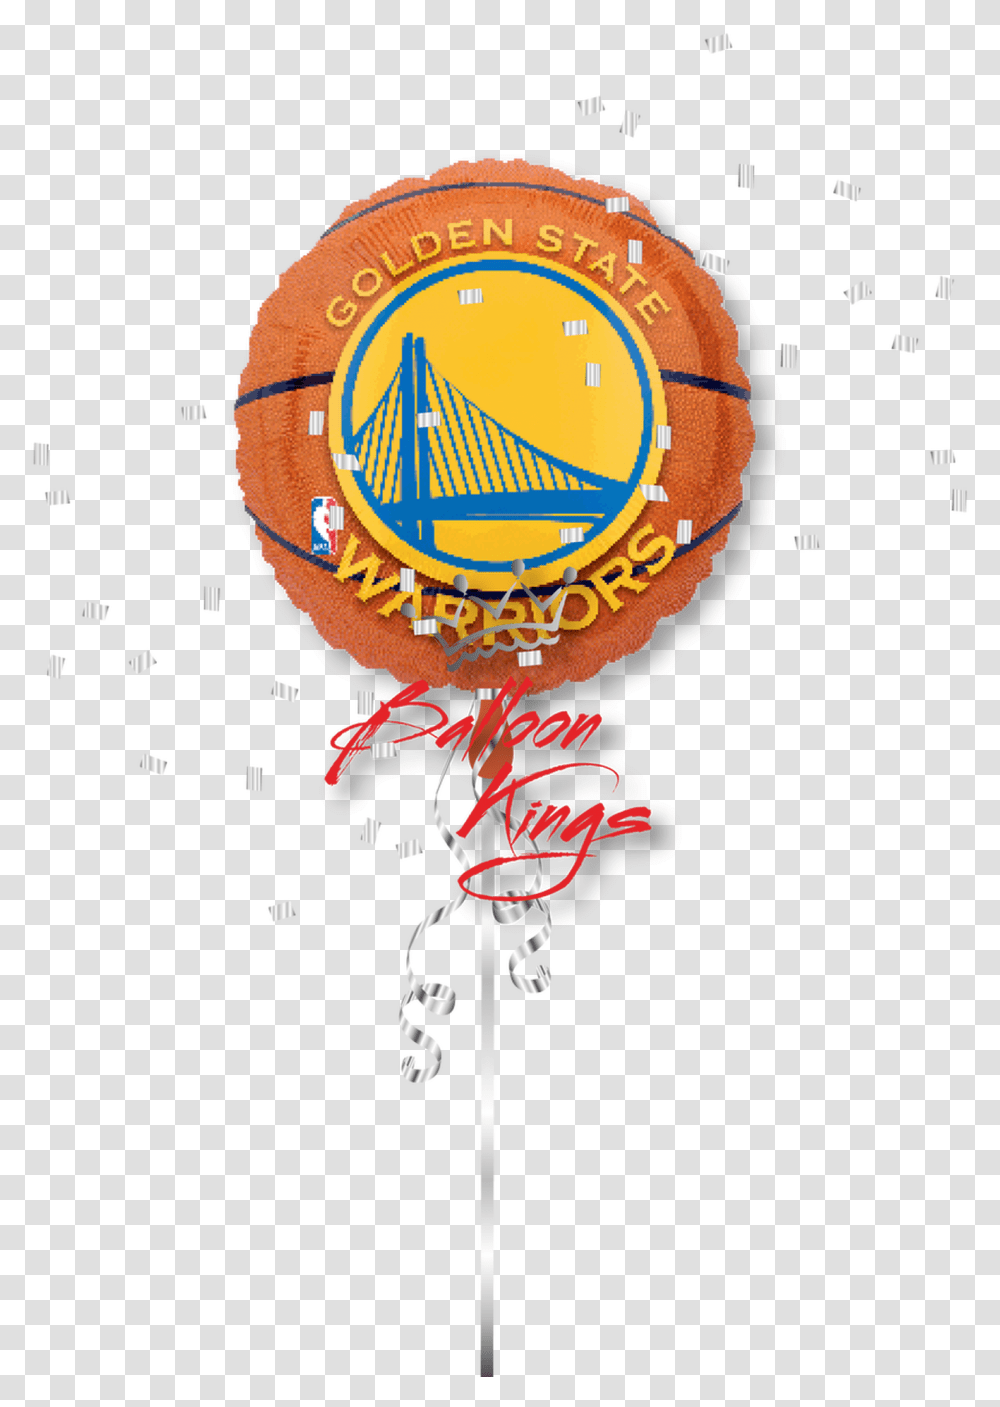 Golden State Warriors Basketball Ballons, Logo, Symbol, Trademark, Clock Tower Transparent Png